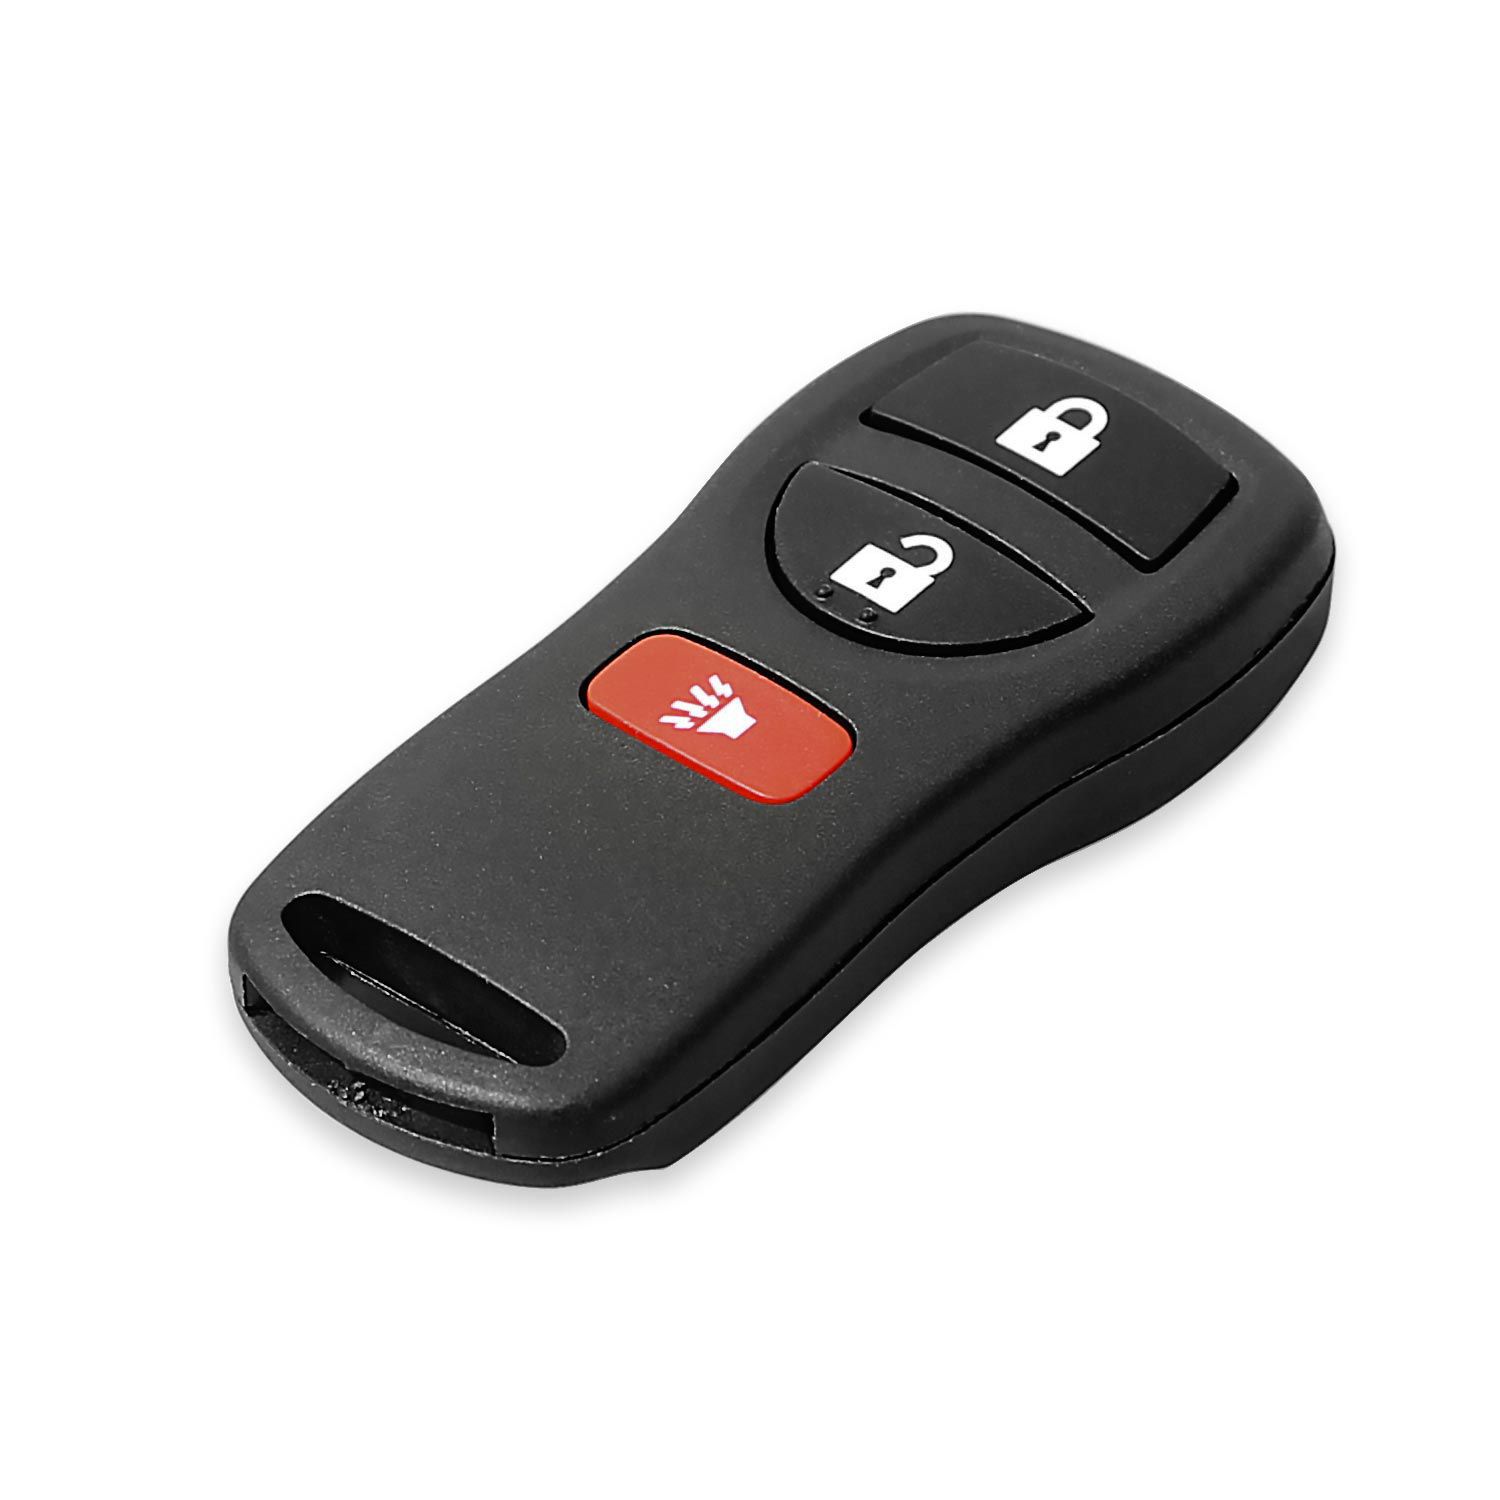 Nissan 433Mhz FCC ID KR5S180144106 2 + 1 кнопка интеллектуальный ключ